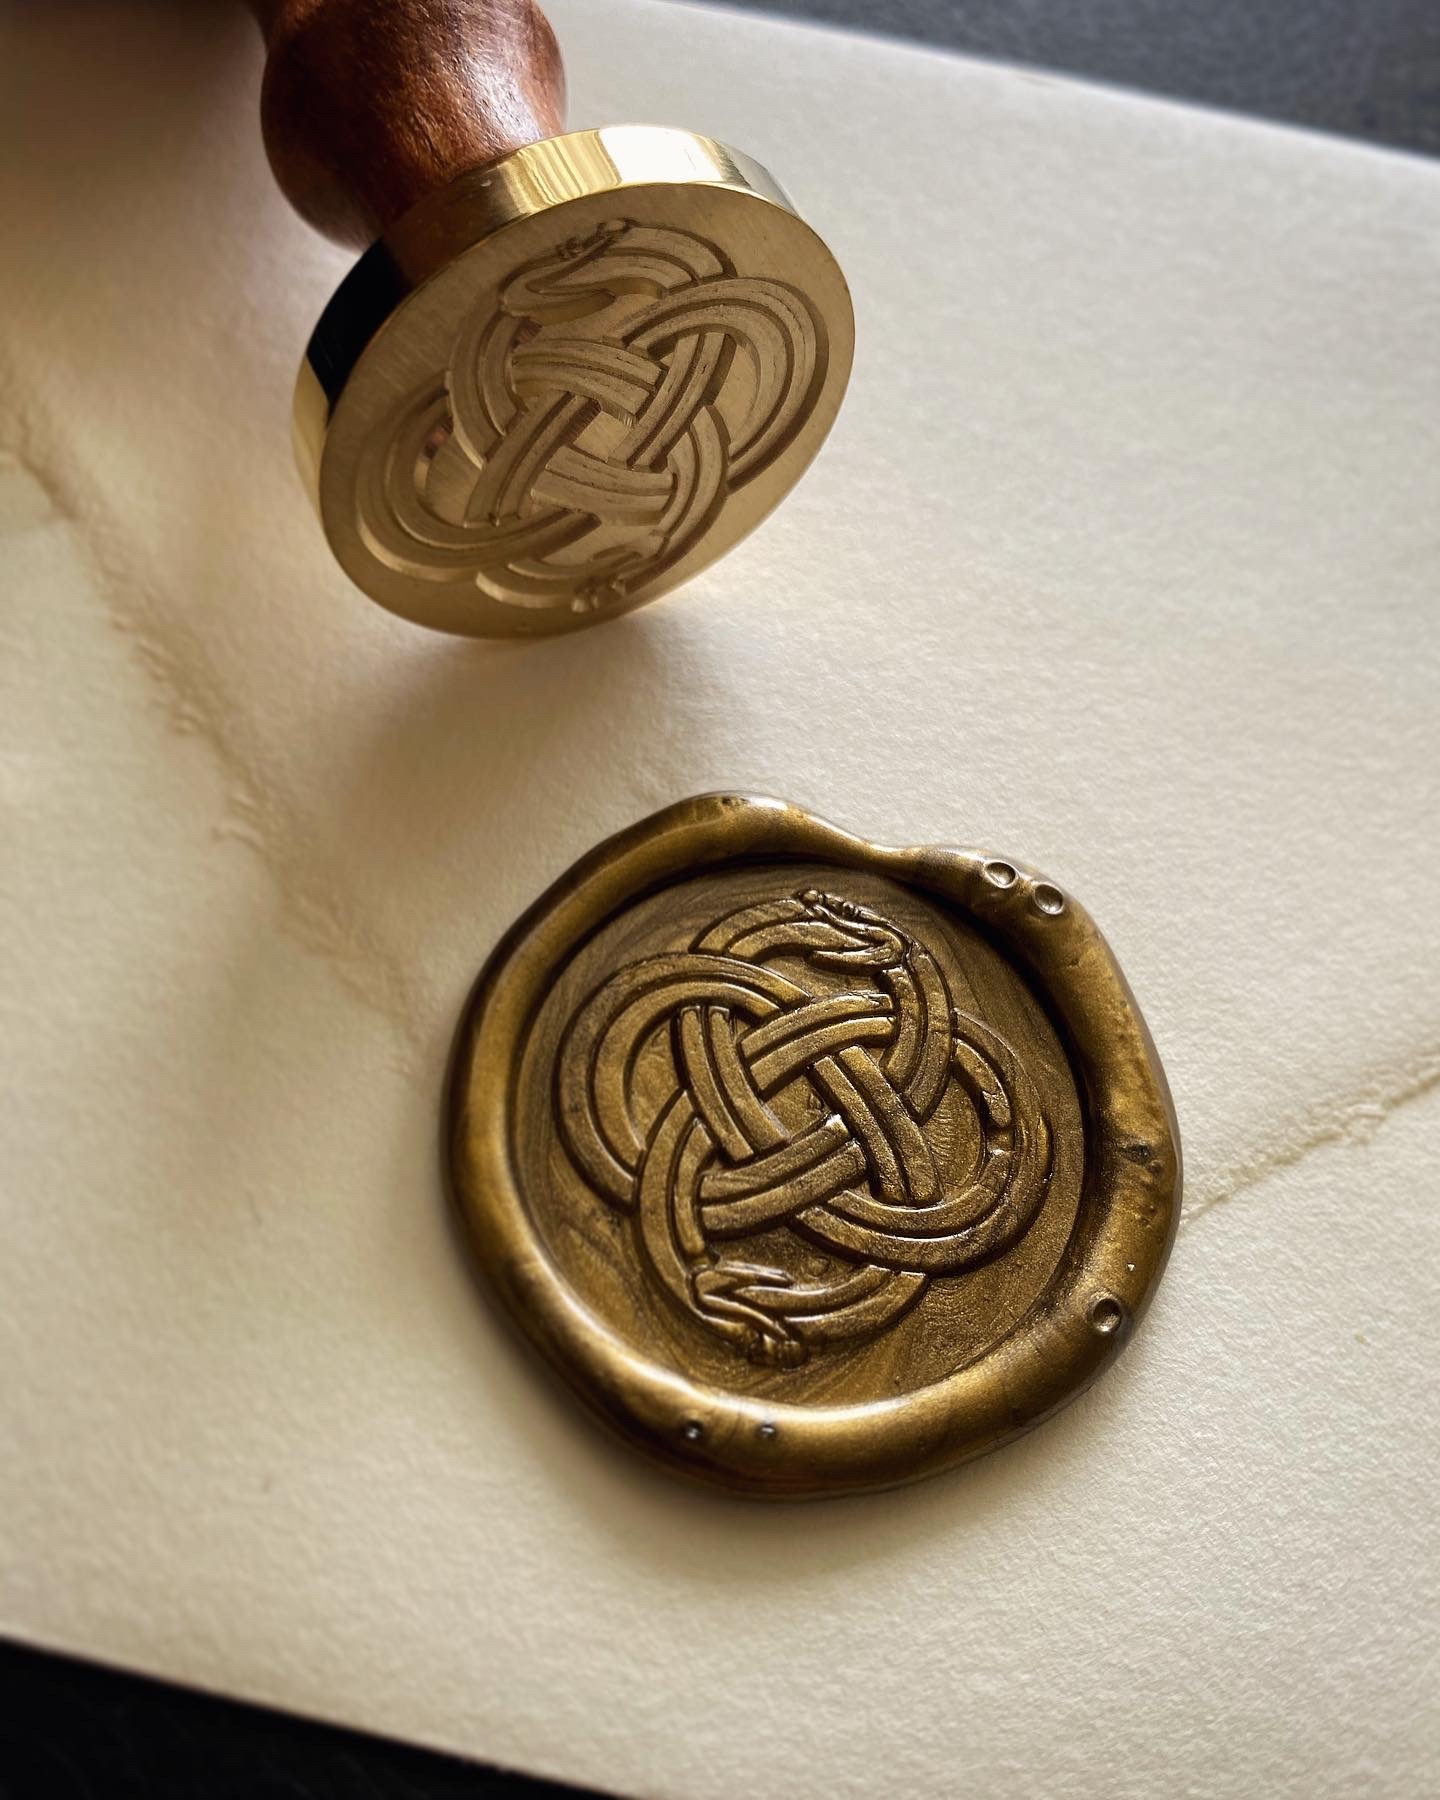 OROBOROS Metal Stamp, ImpressArt 6mm Infinity or Eternal Symbol Ouroboros  Egyptian Stamp Greek Stamp, Snake Stamp, Impress Art Stamping Tool